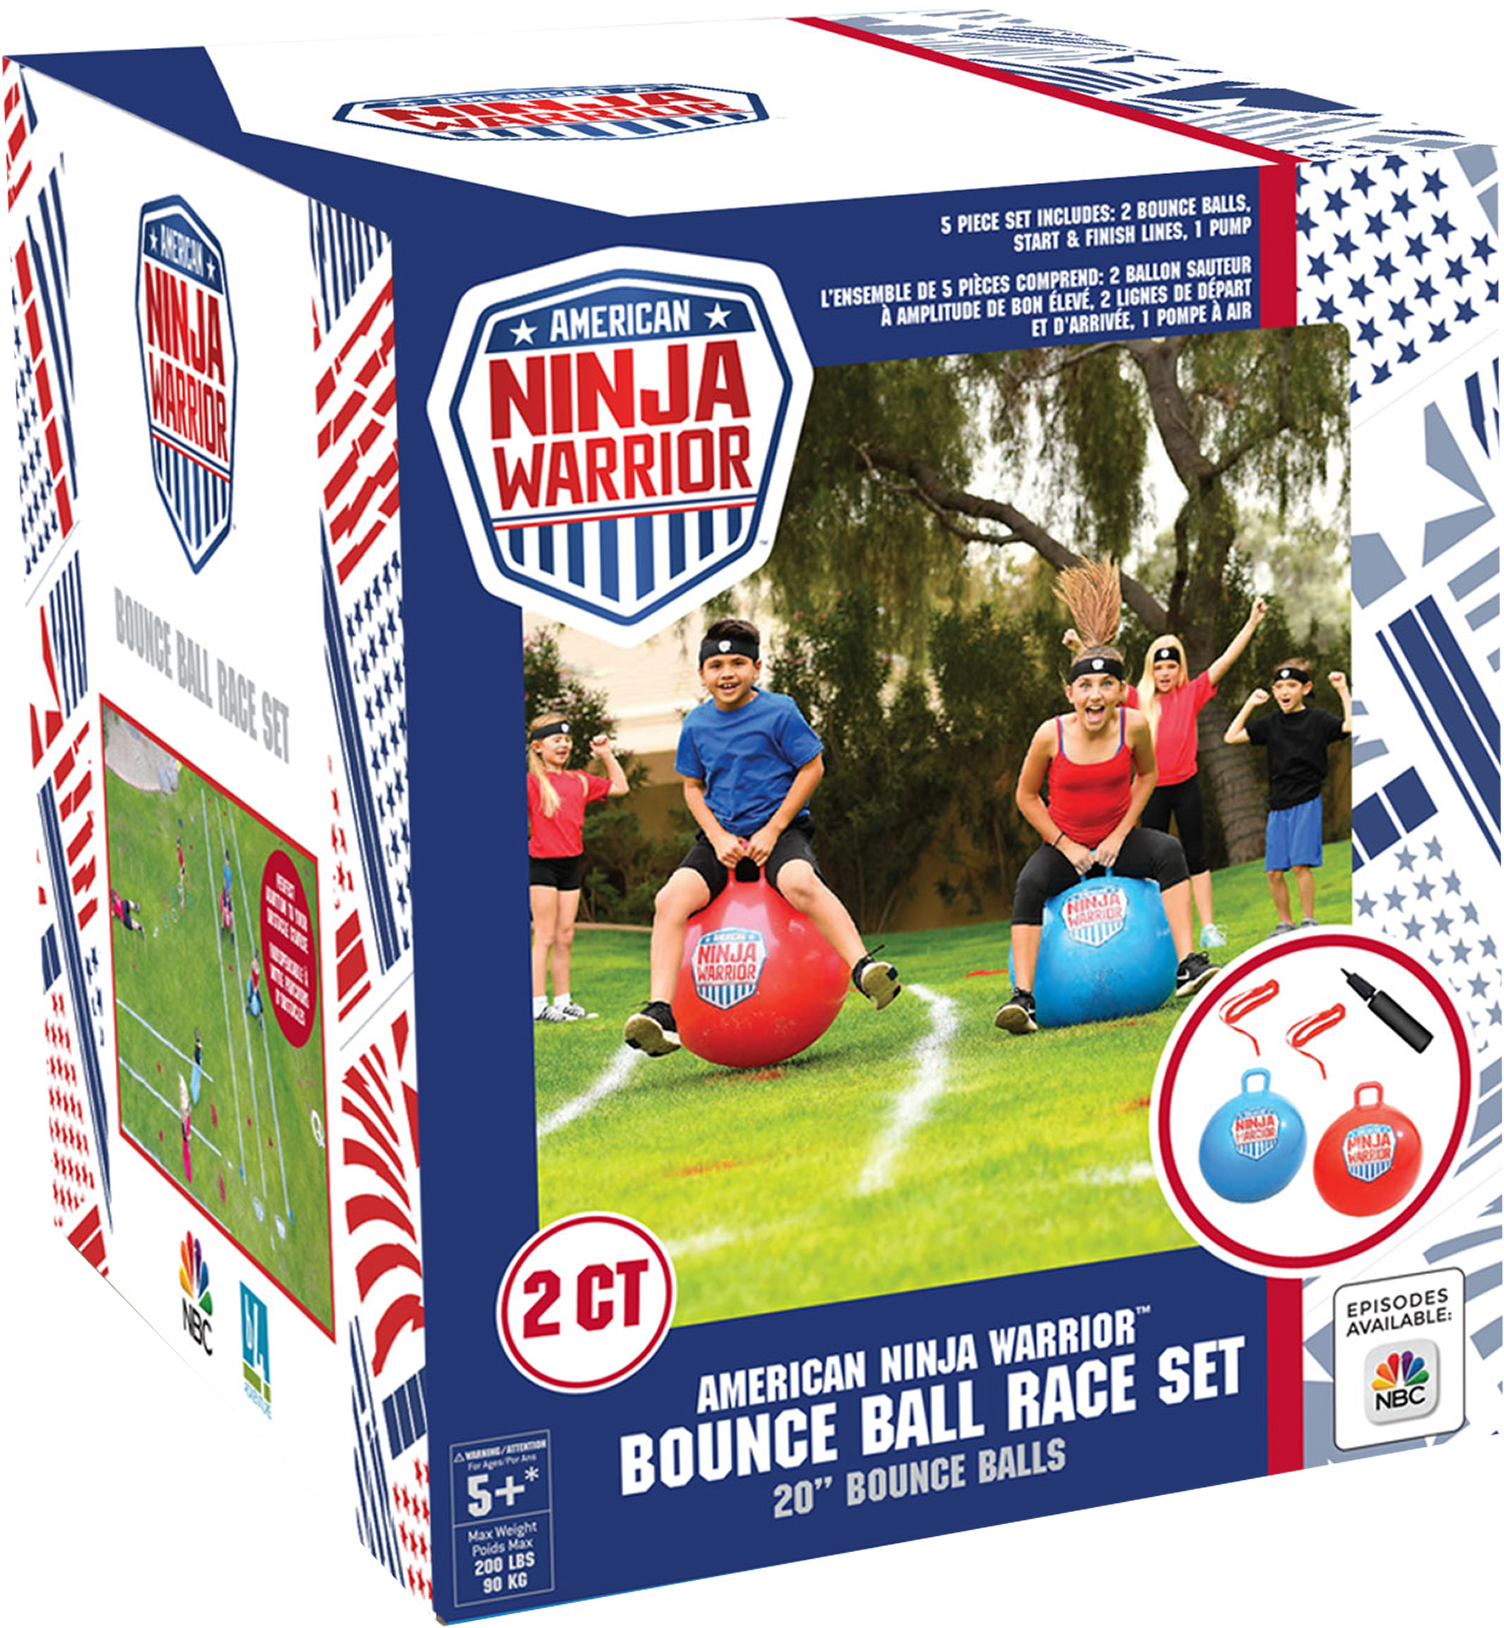 American Ninja Warrior Bounce Ball Race Set Packaging